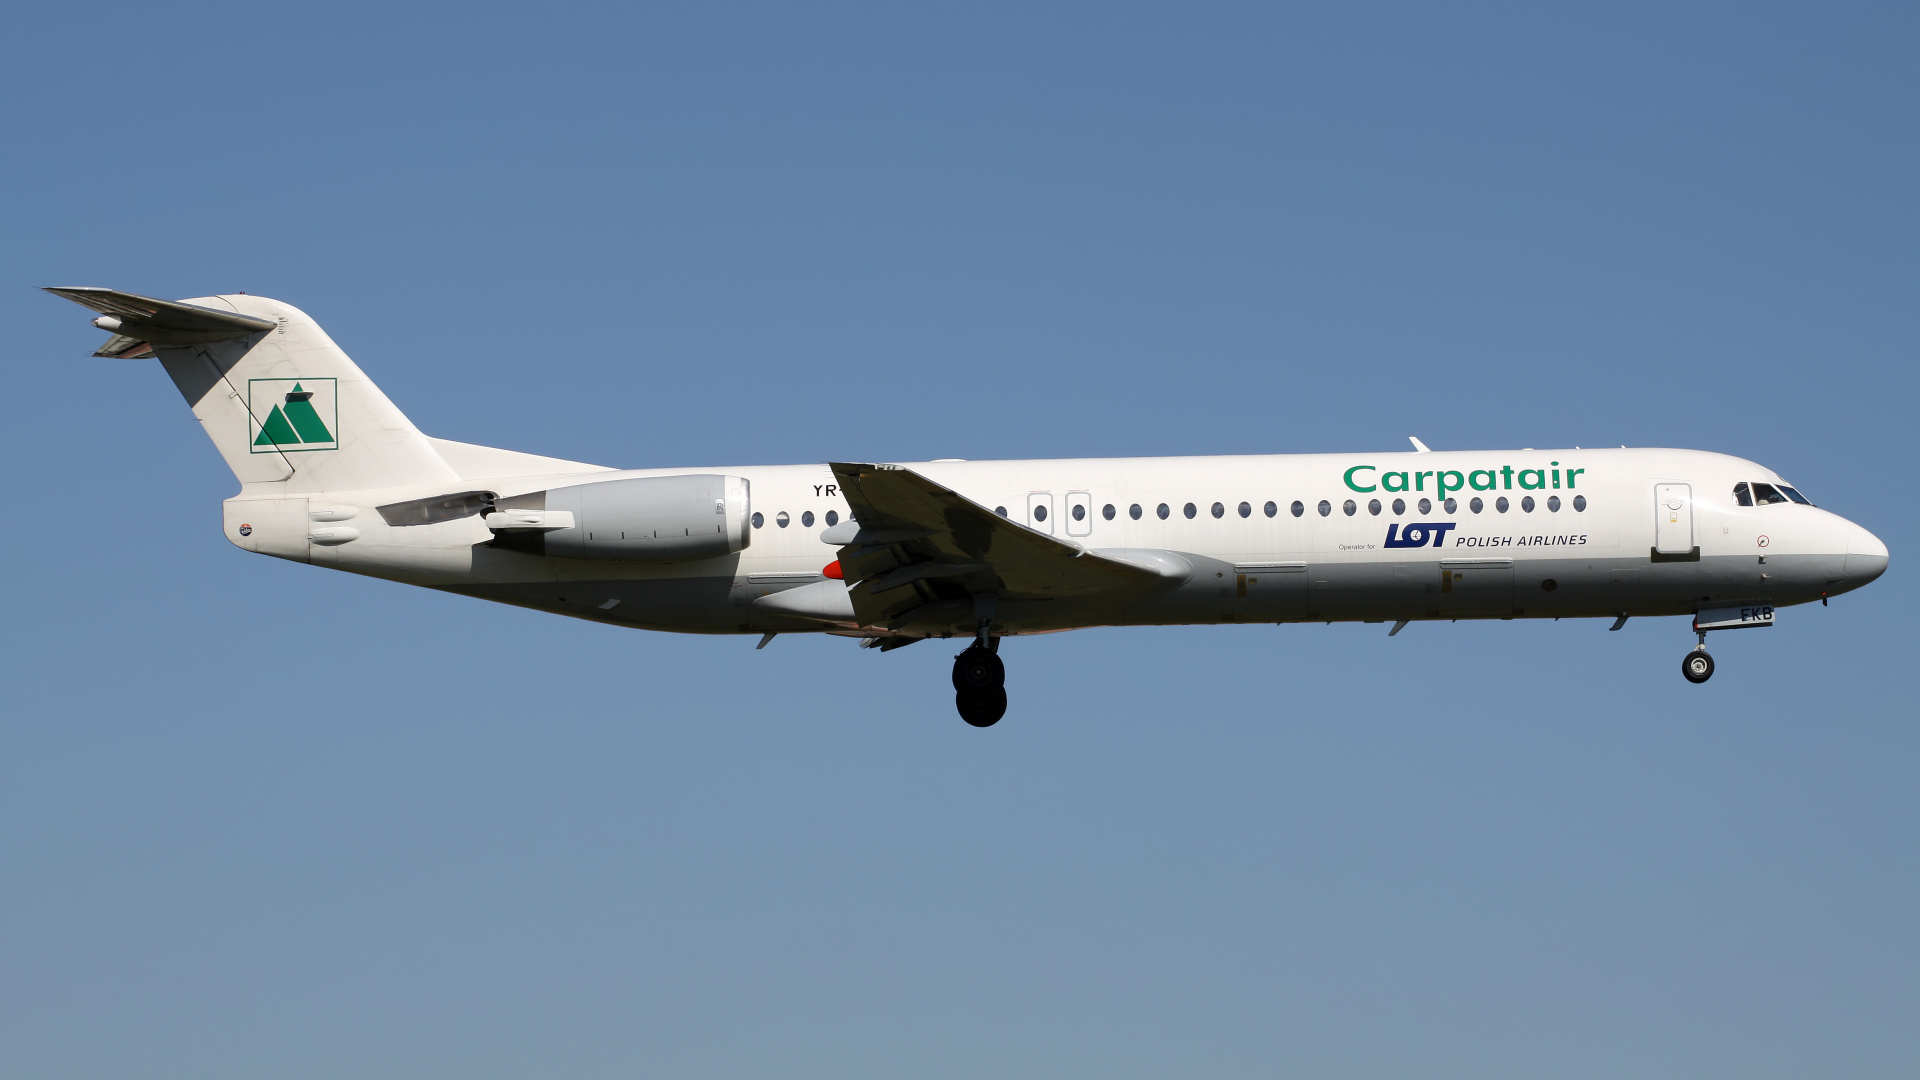 YR-FKB (LOT Polish Airlines) (Aircraft » EPWA Spotting » Fokker 100 » Carpatair)